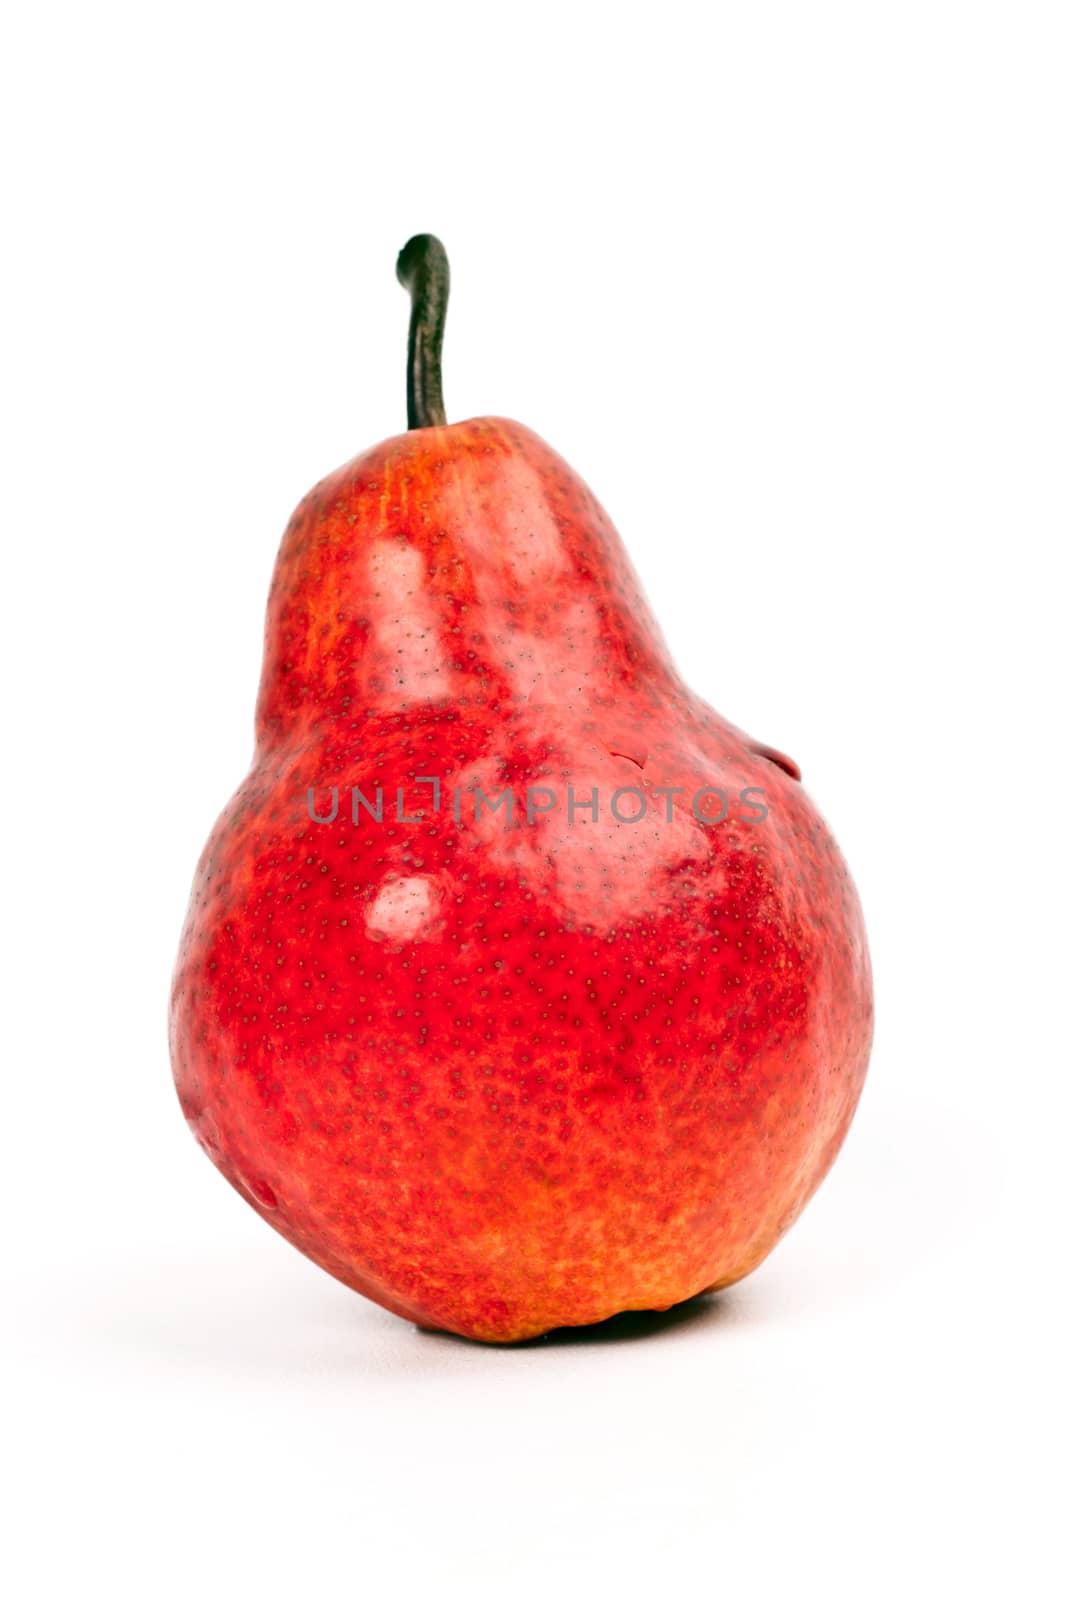 red pear by aziatik13